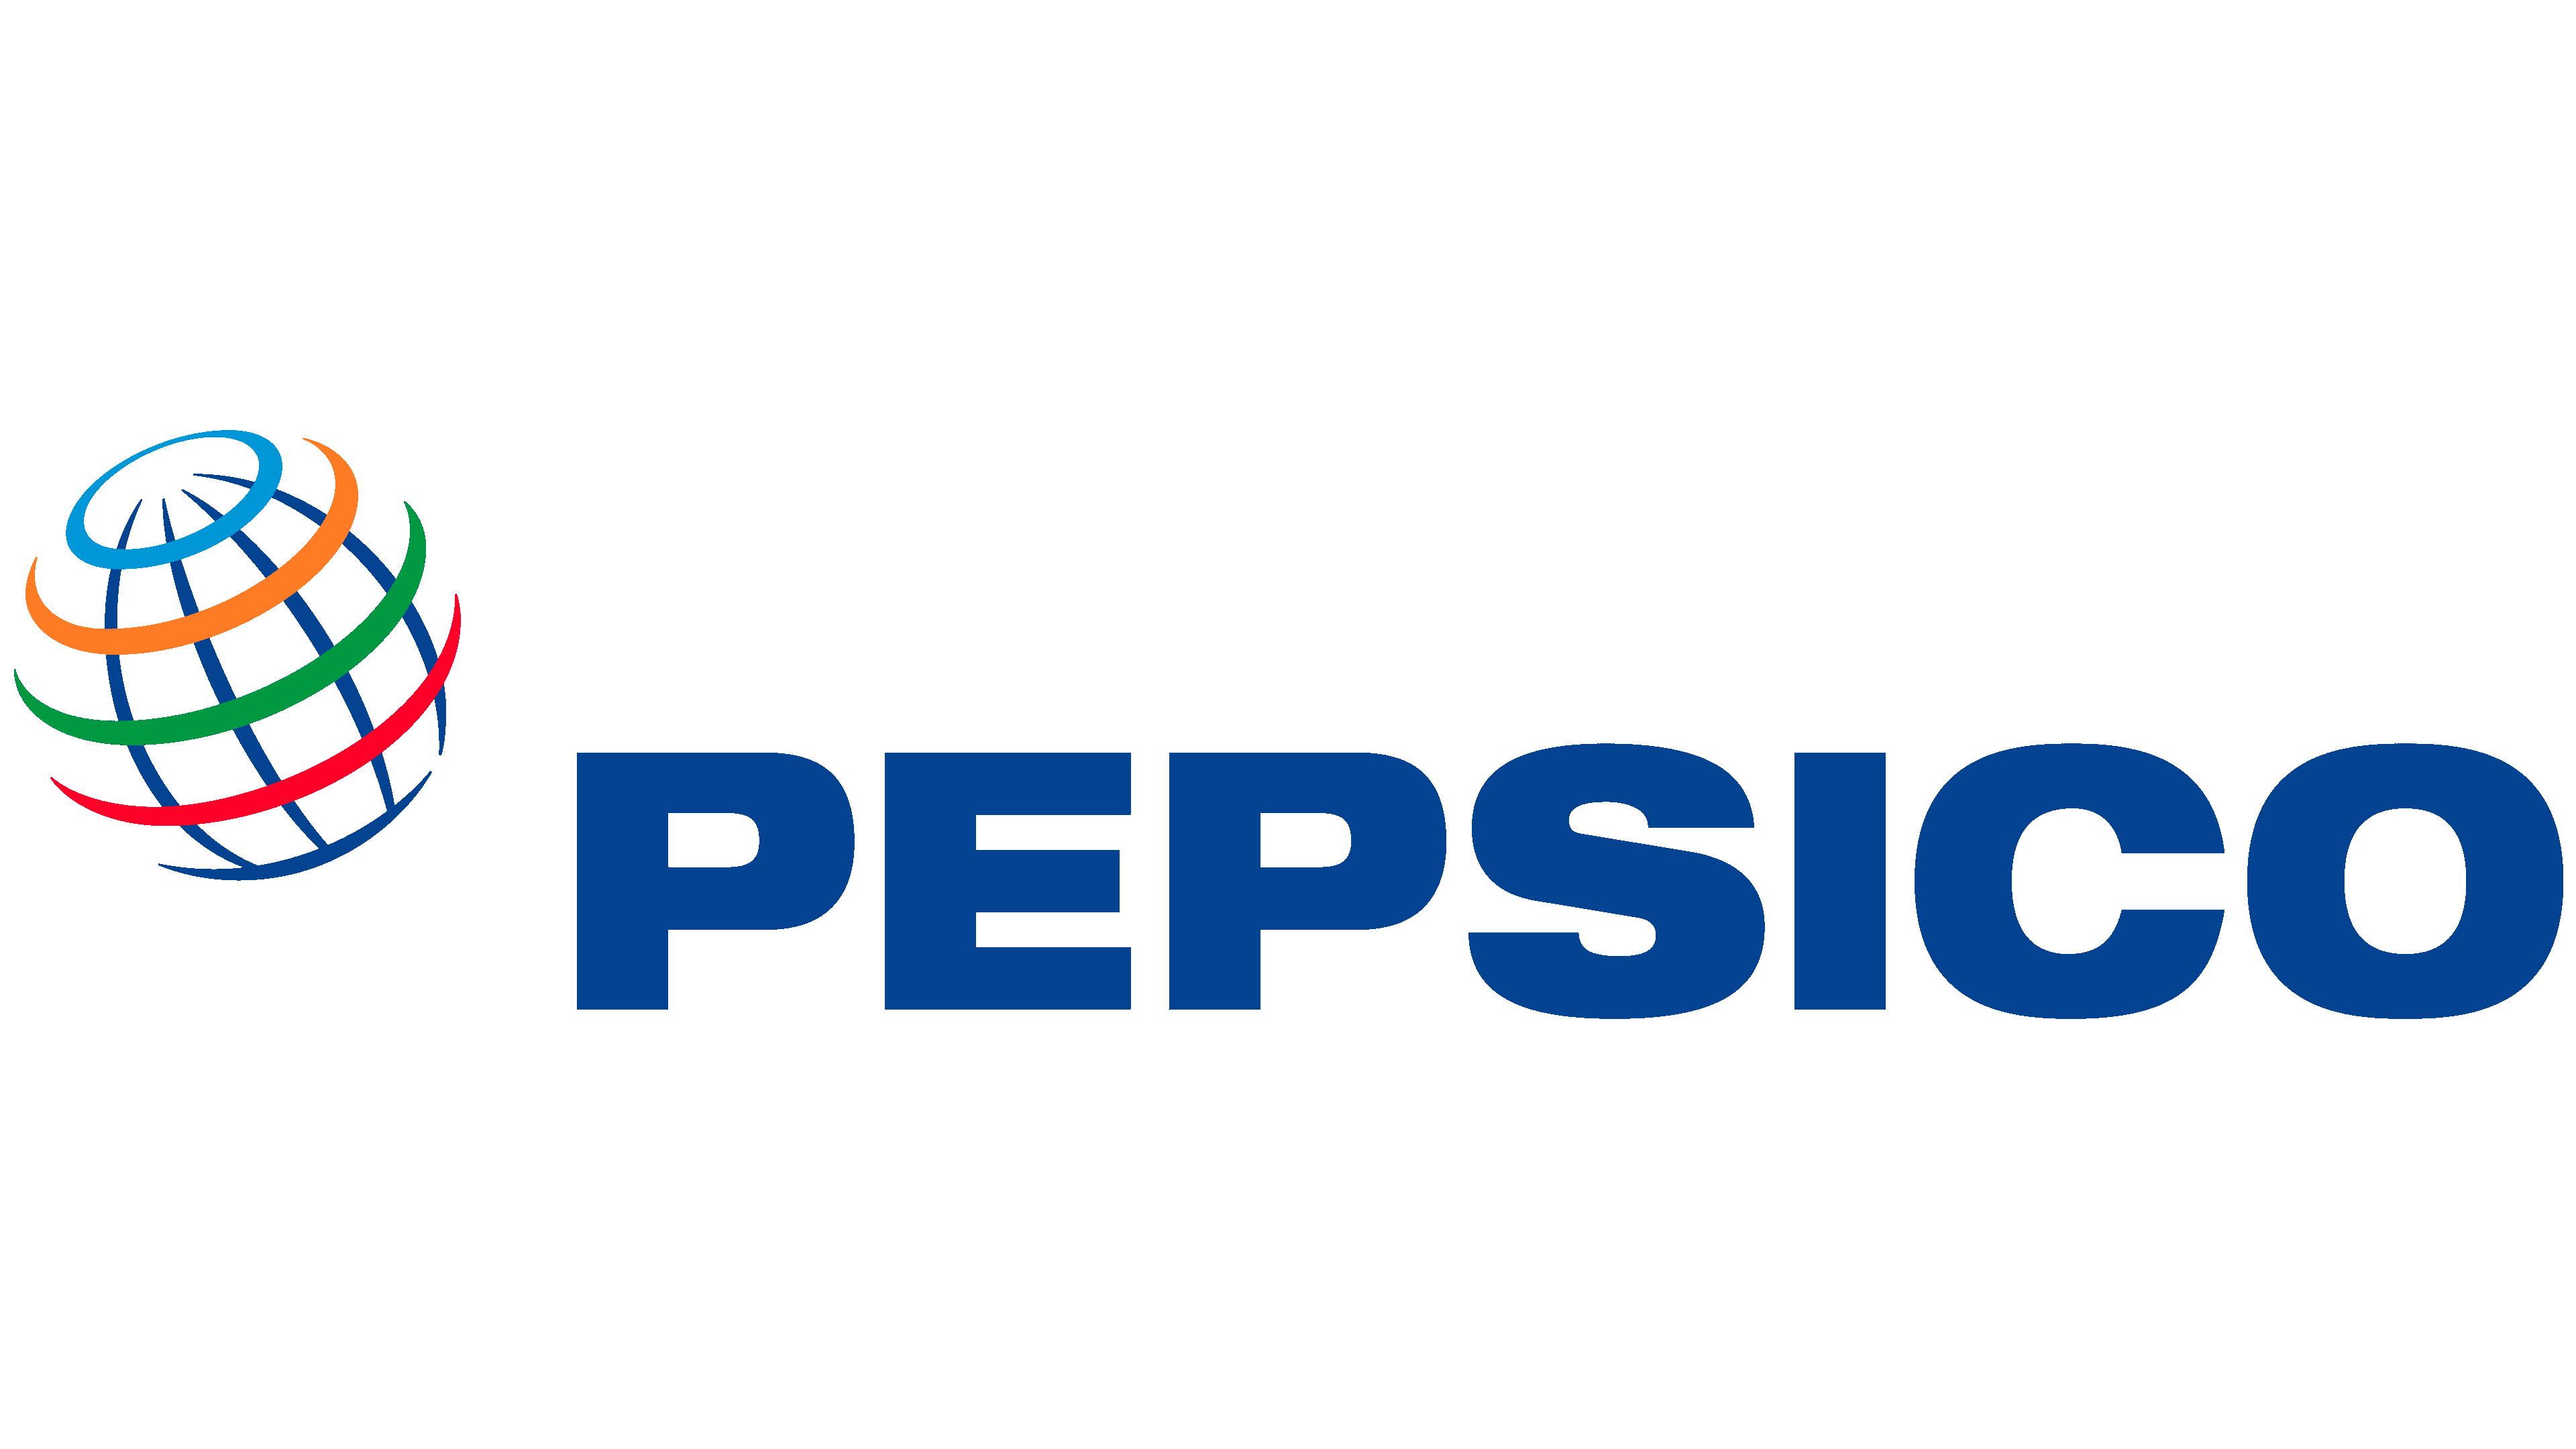 Pepsico-Logo